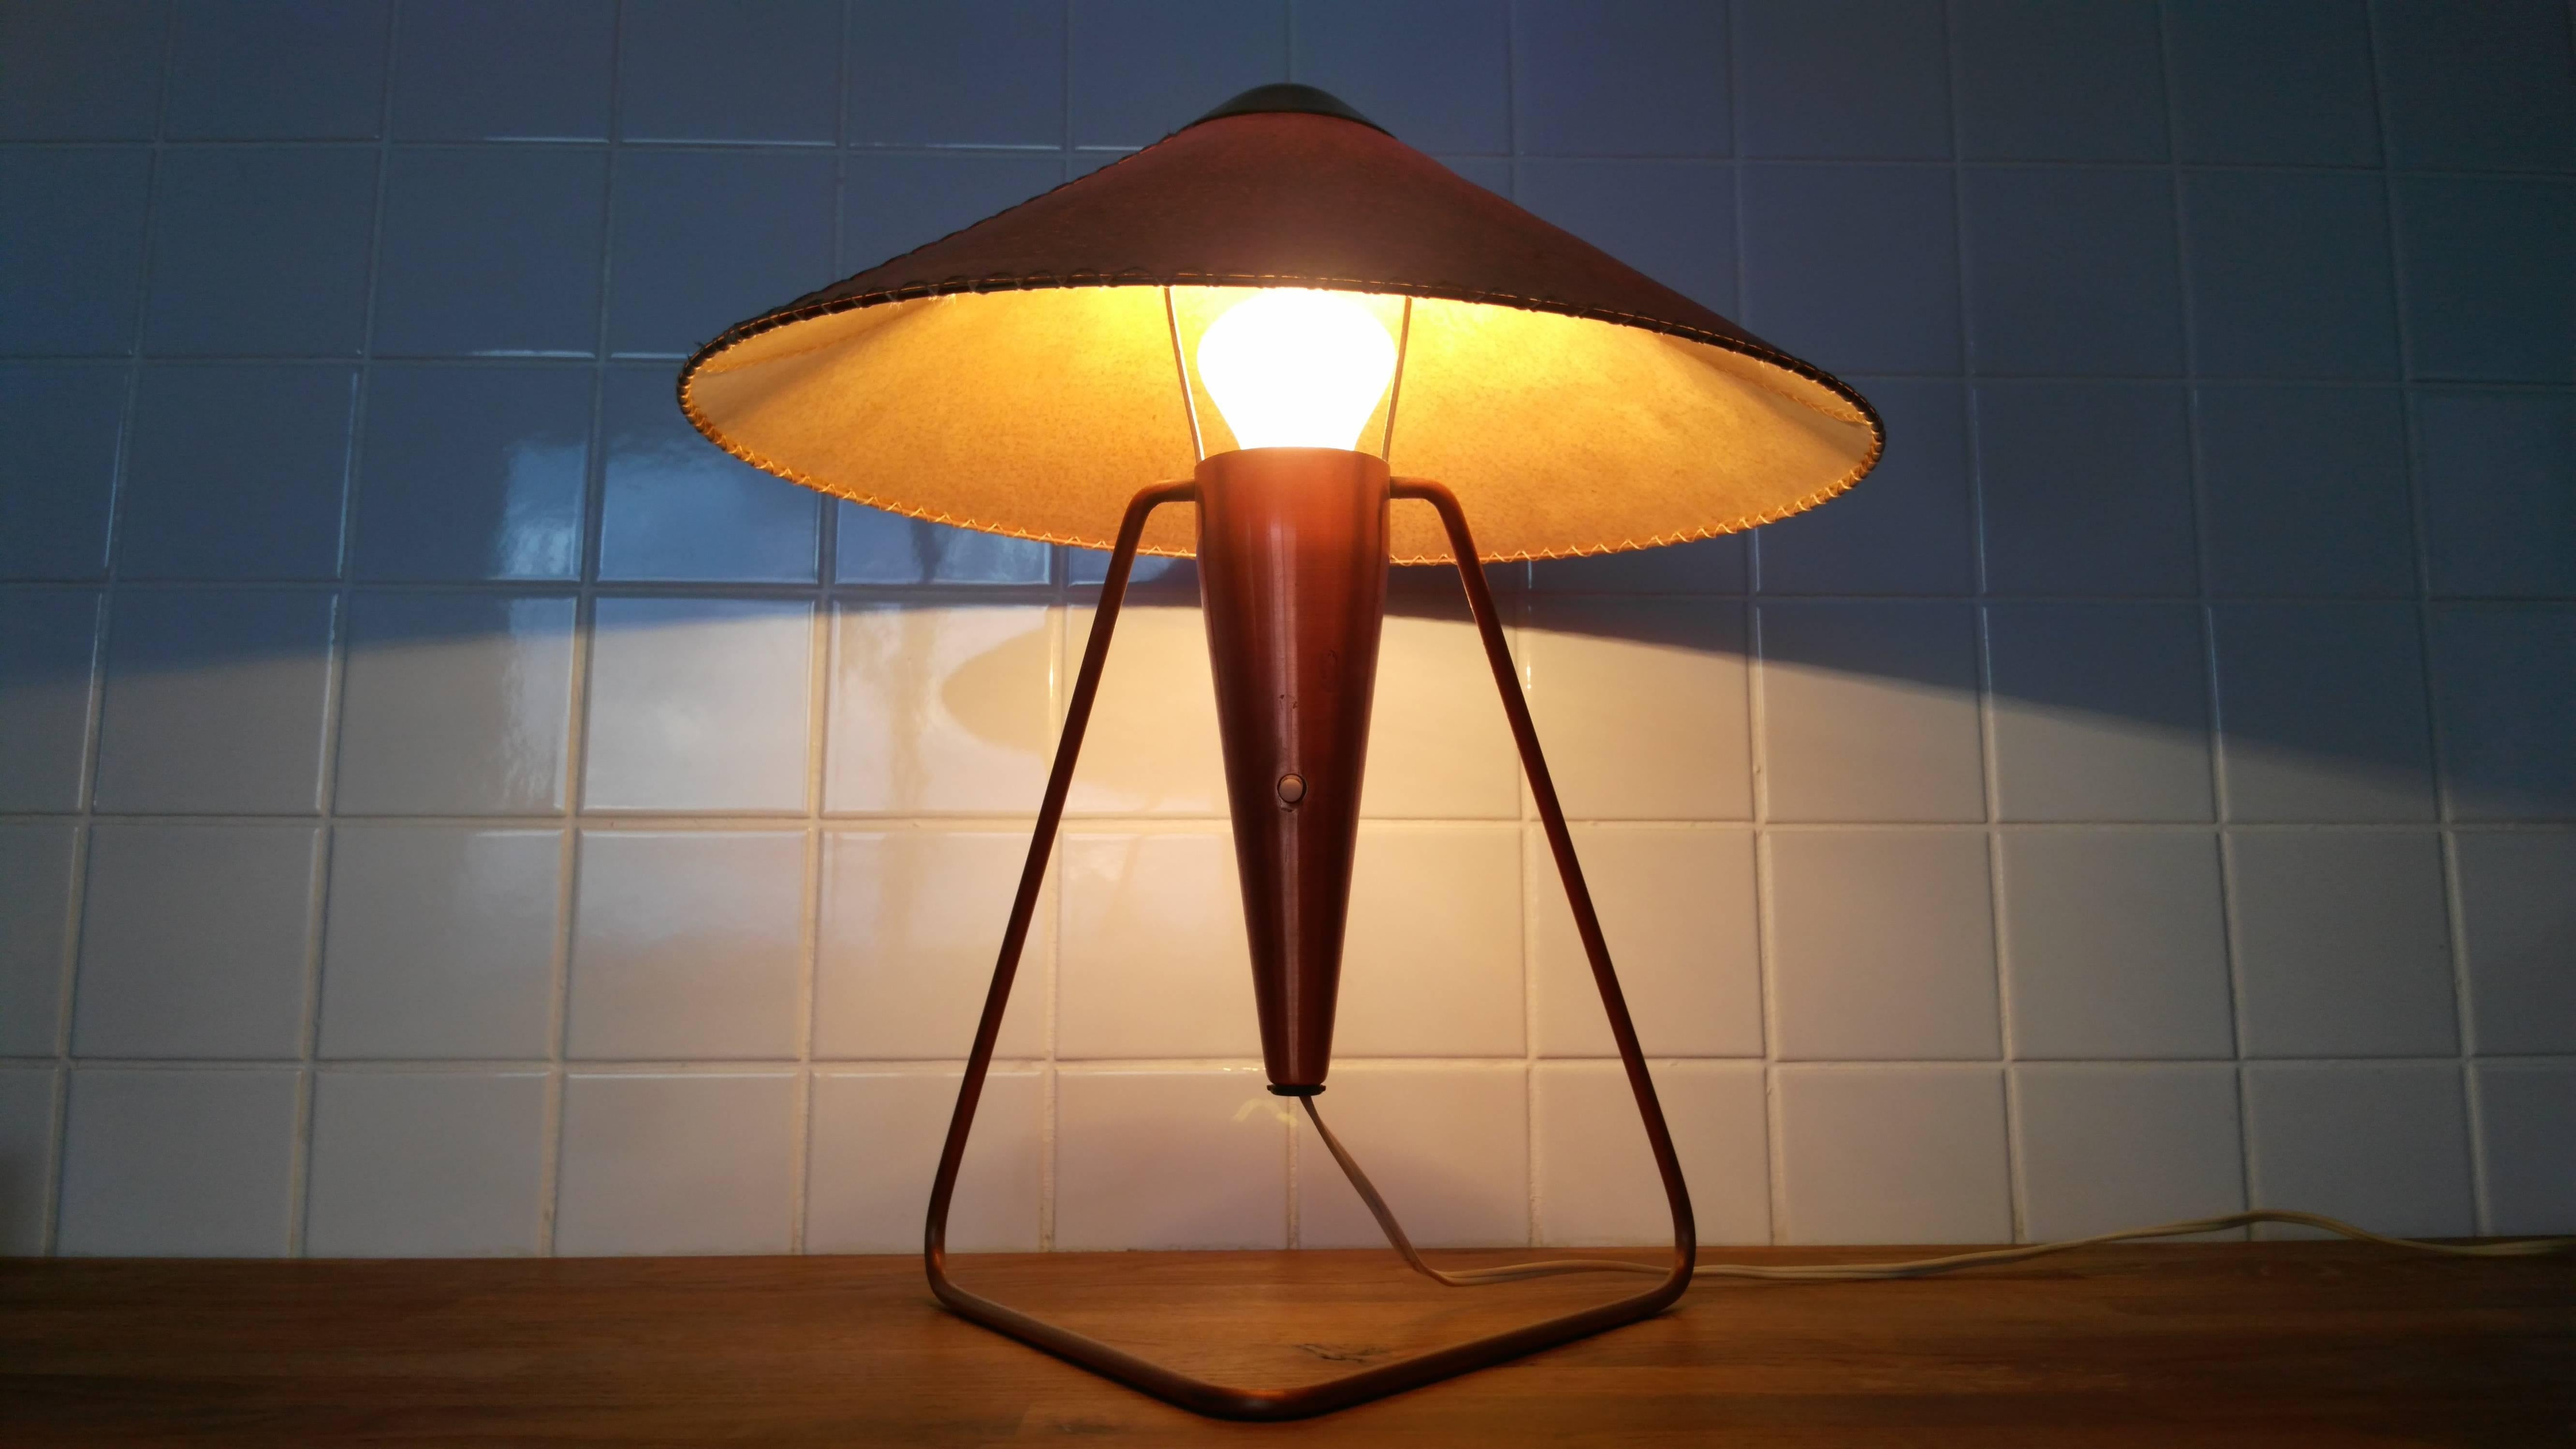 - Czechoslovakia, 1950s
- Design: Helena Frantová
- Biggest version of this lamp
- Very nice original condition.